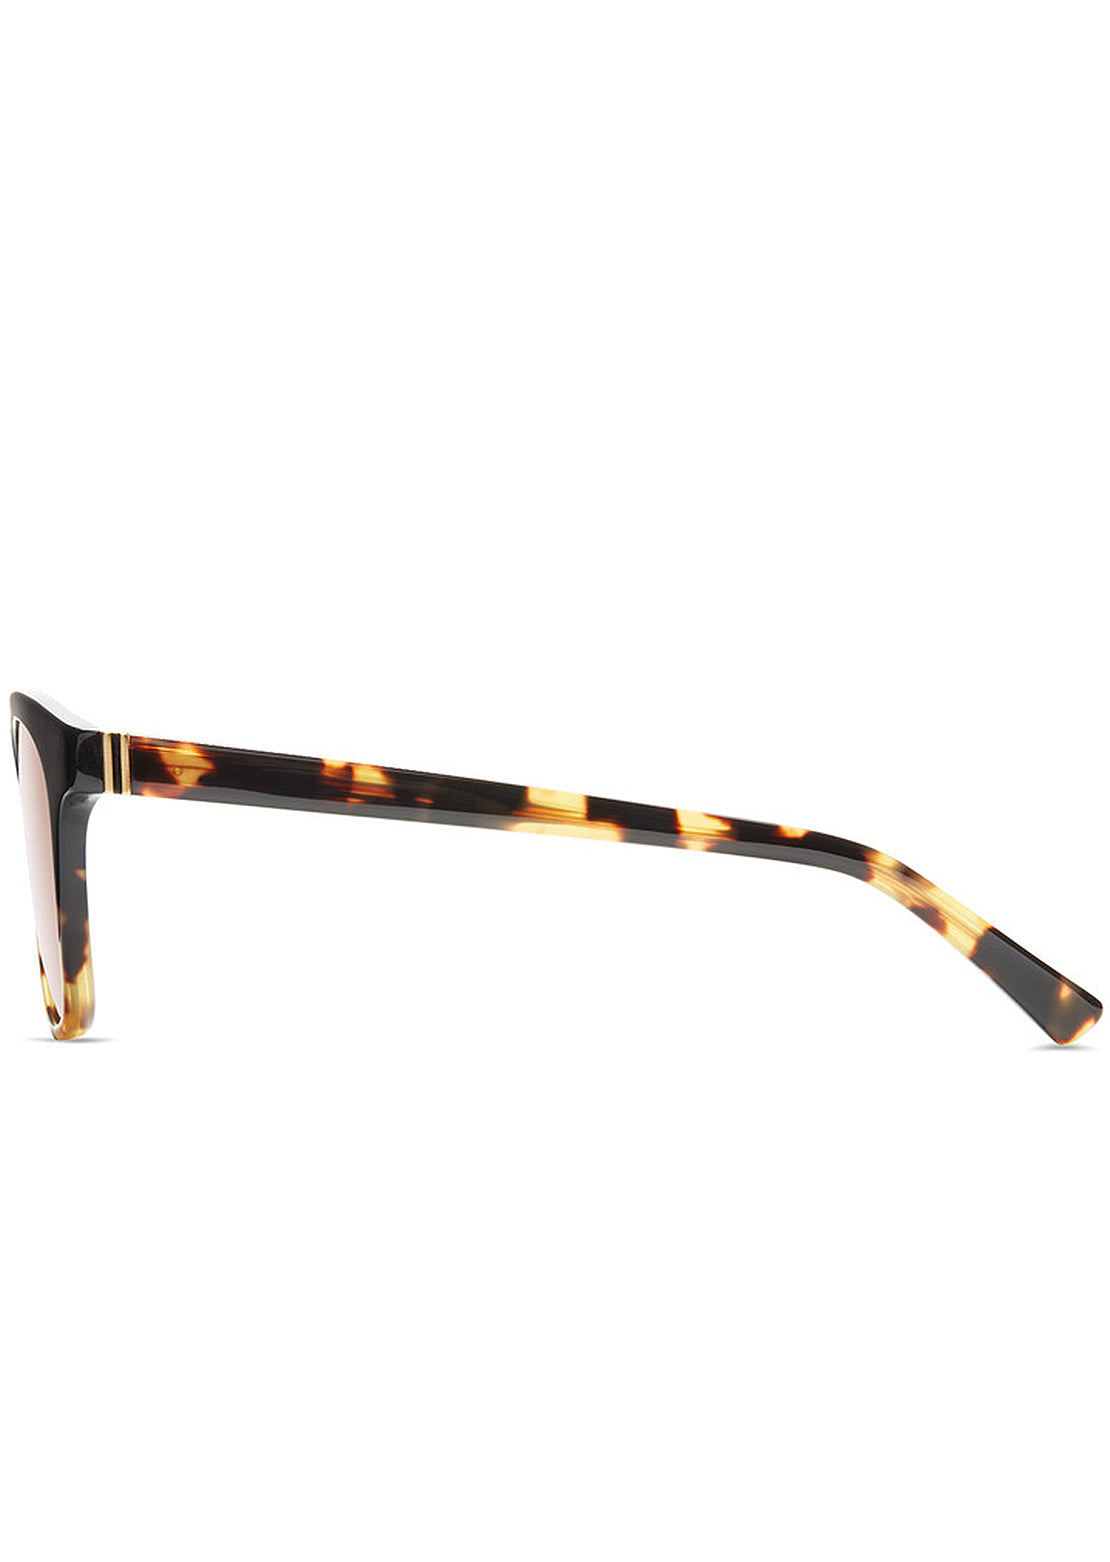 Von Zipper Men&#39;s Morse Sunglasses Tortuga De/Bronze